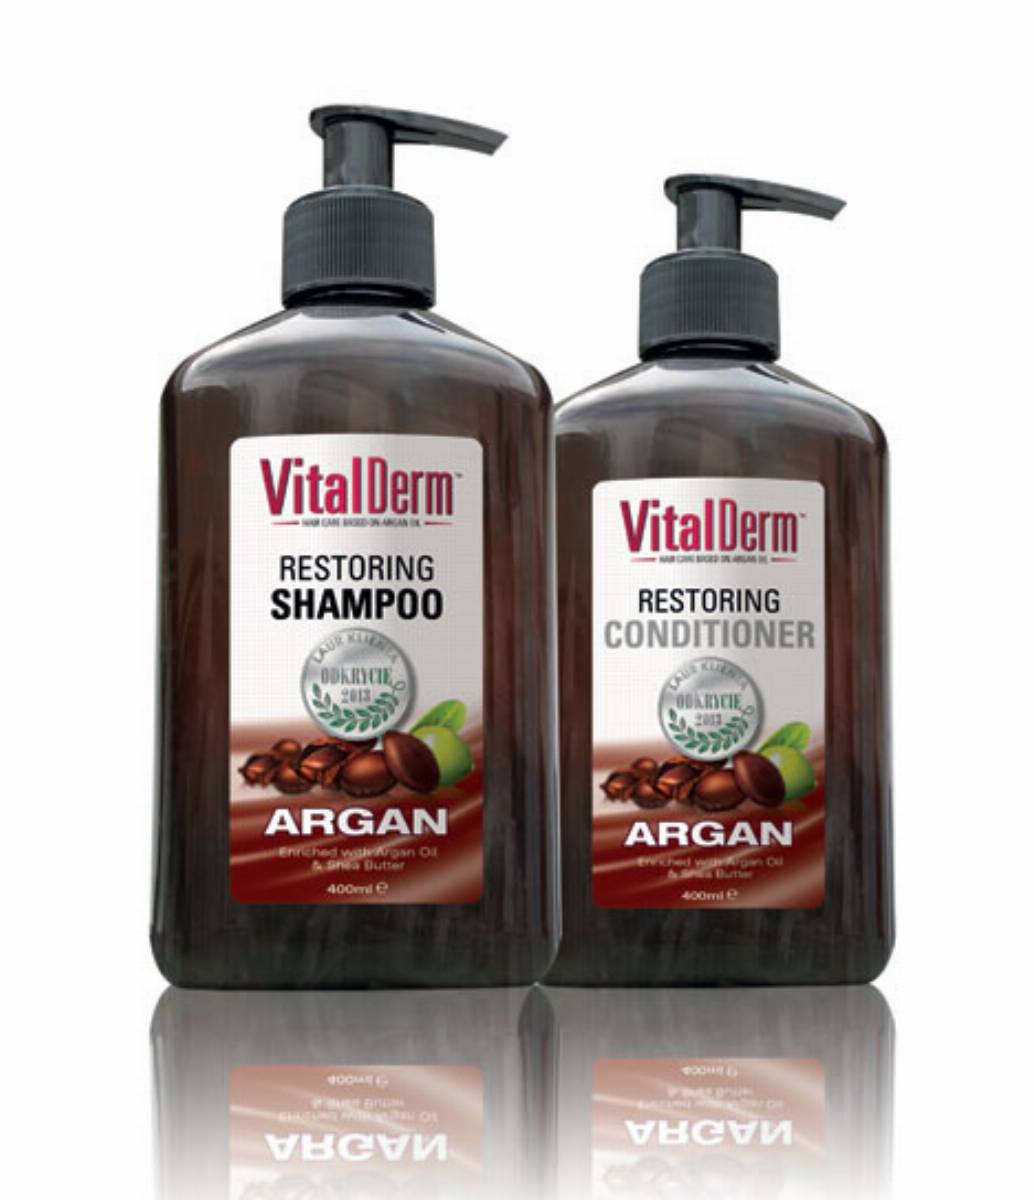 vita derm szampon argan w ktorej drogerii